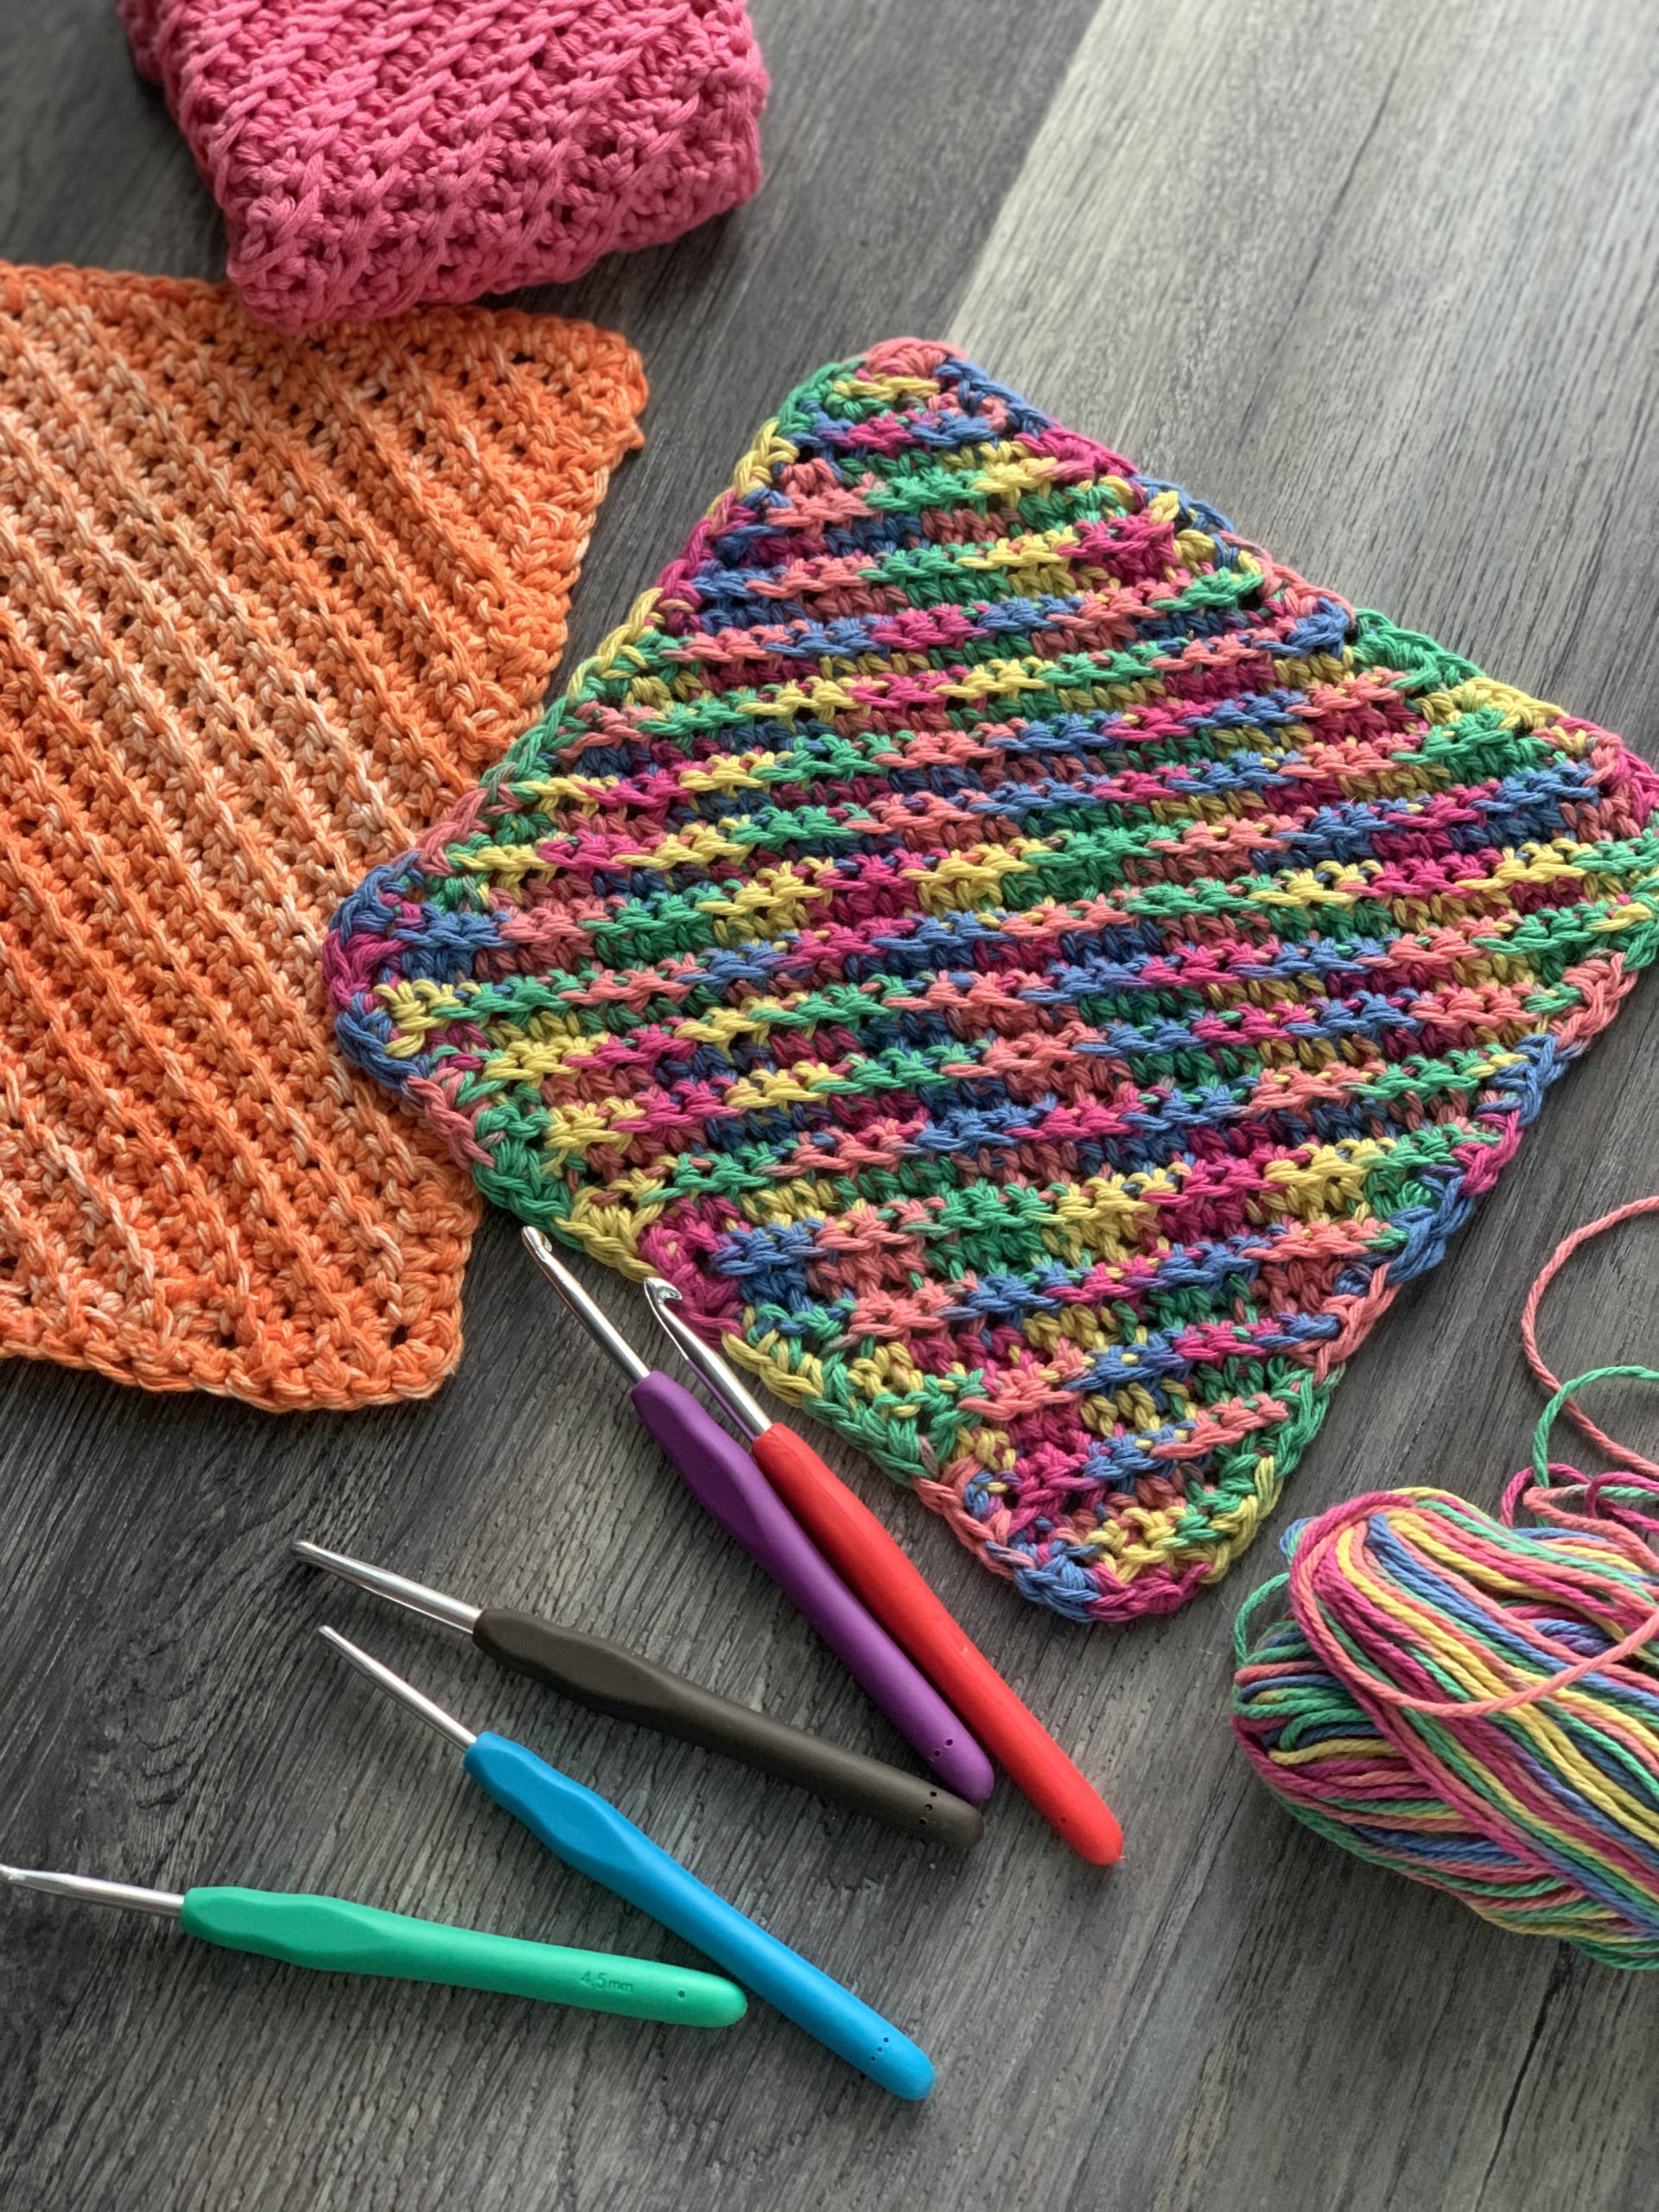 Ribbed Crochet Dishcloth Pattern